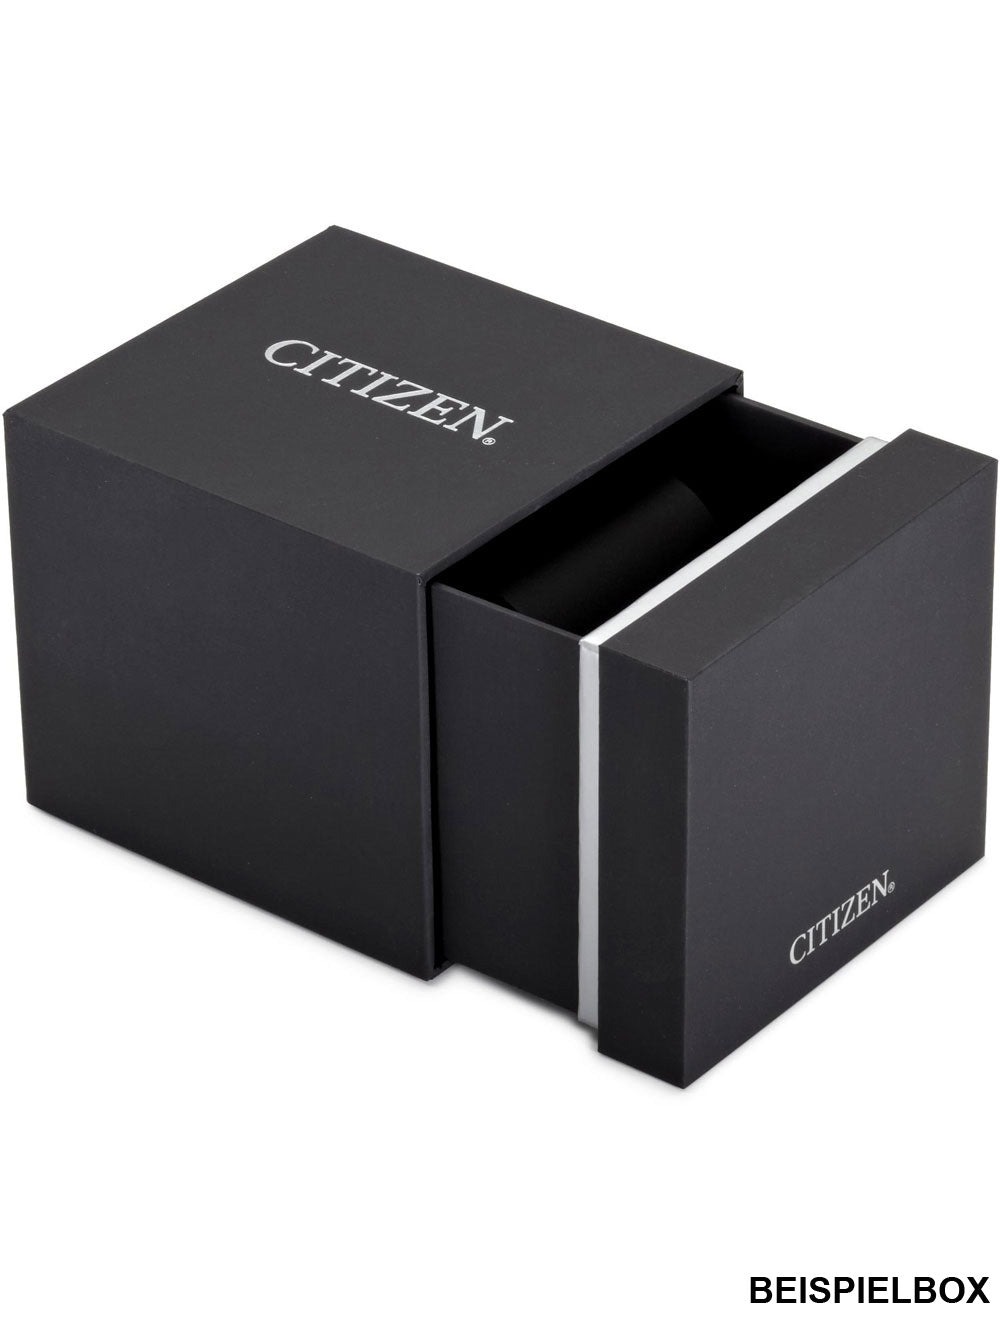 Citizen Promaster Men CB5000-50L 45mm 20ATM